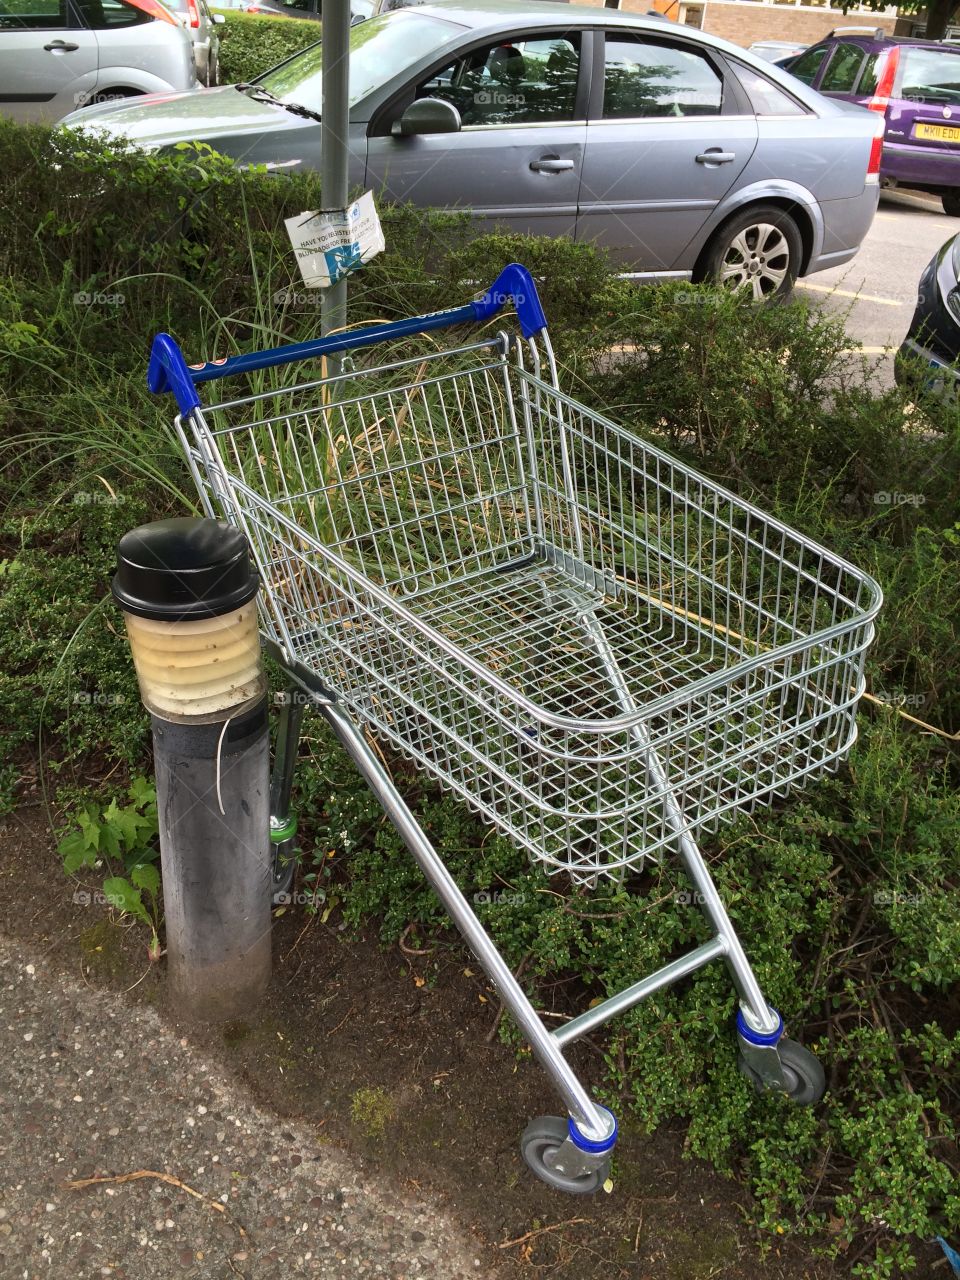 Abandoned shopping trolley